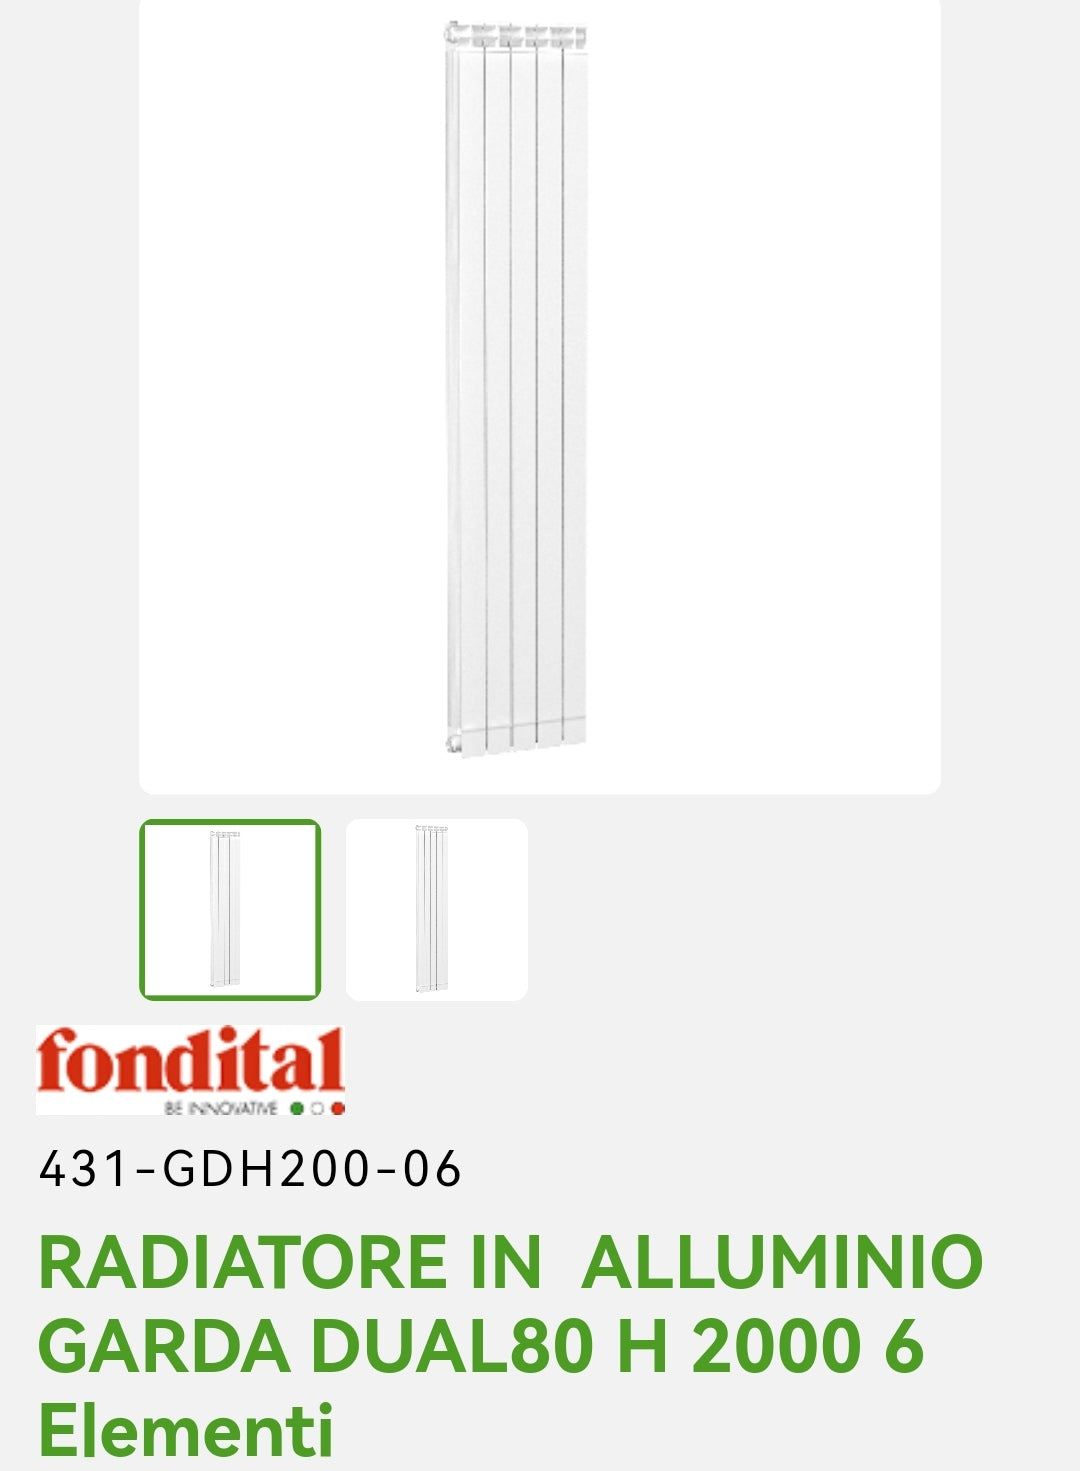 Radiatore Alluminio Garda Dual80 H 200 6EL. Fondital